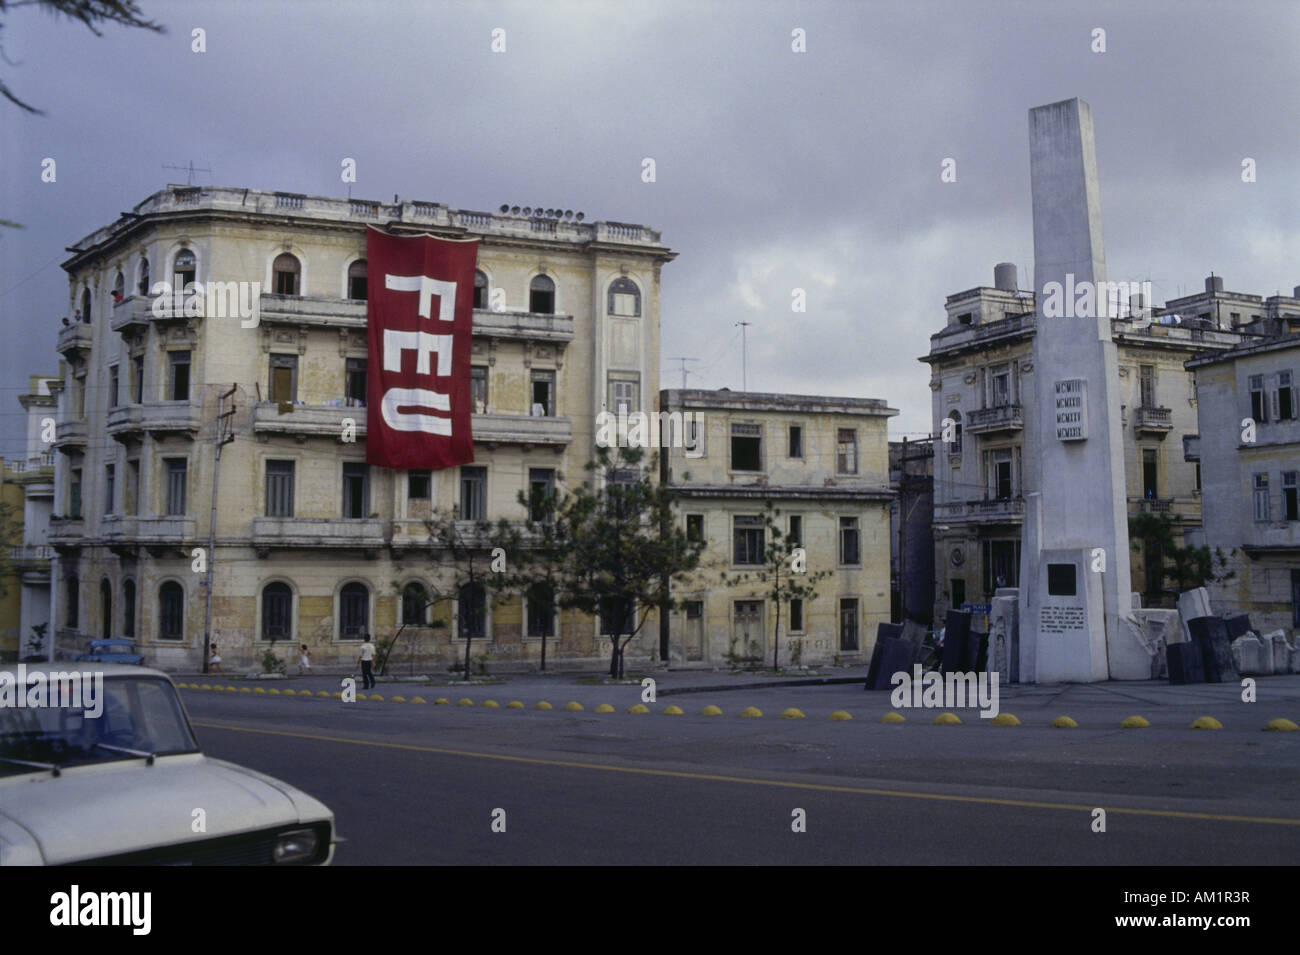 Geographie / Reisen, Kuba, Havanna, Straßenszenen, Haus mit Fahne des Studenten Organisation FEU, Mittelamerika, Denkmal, Stockfoto